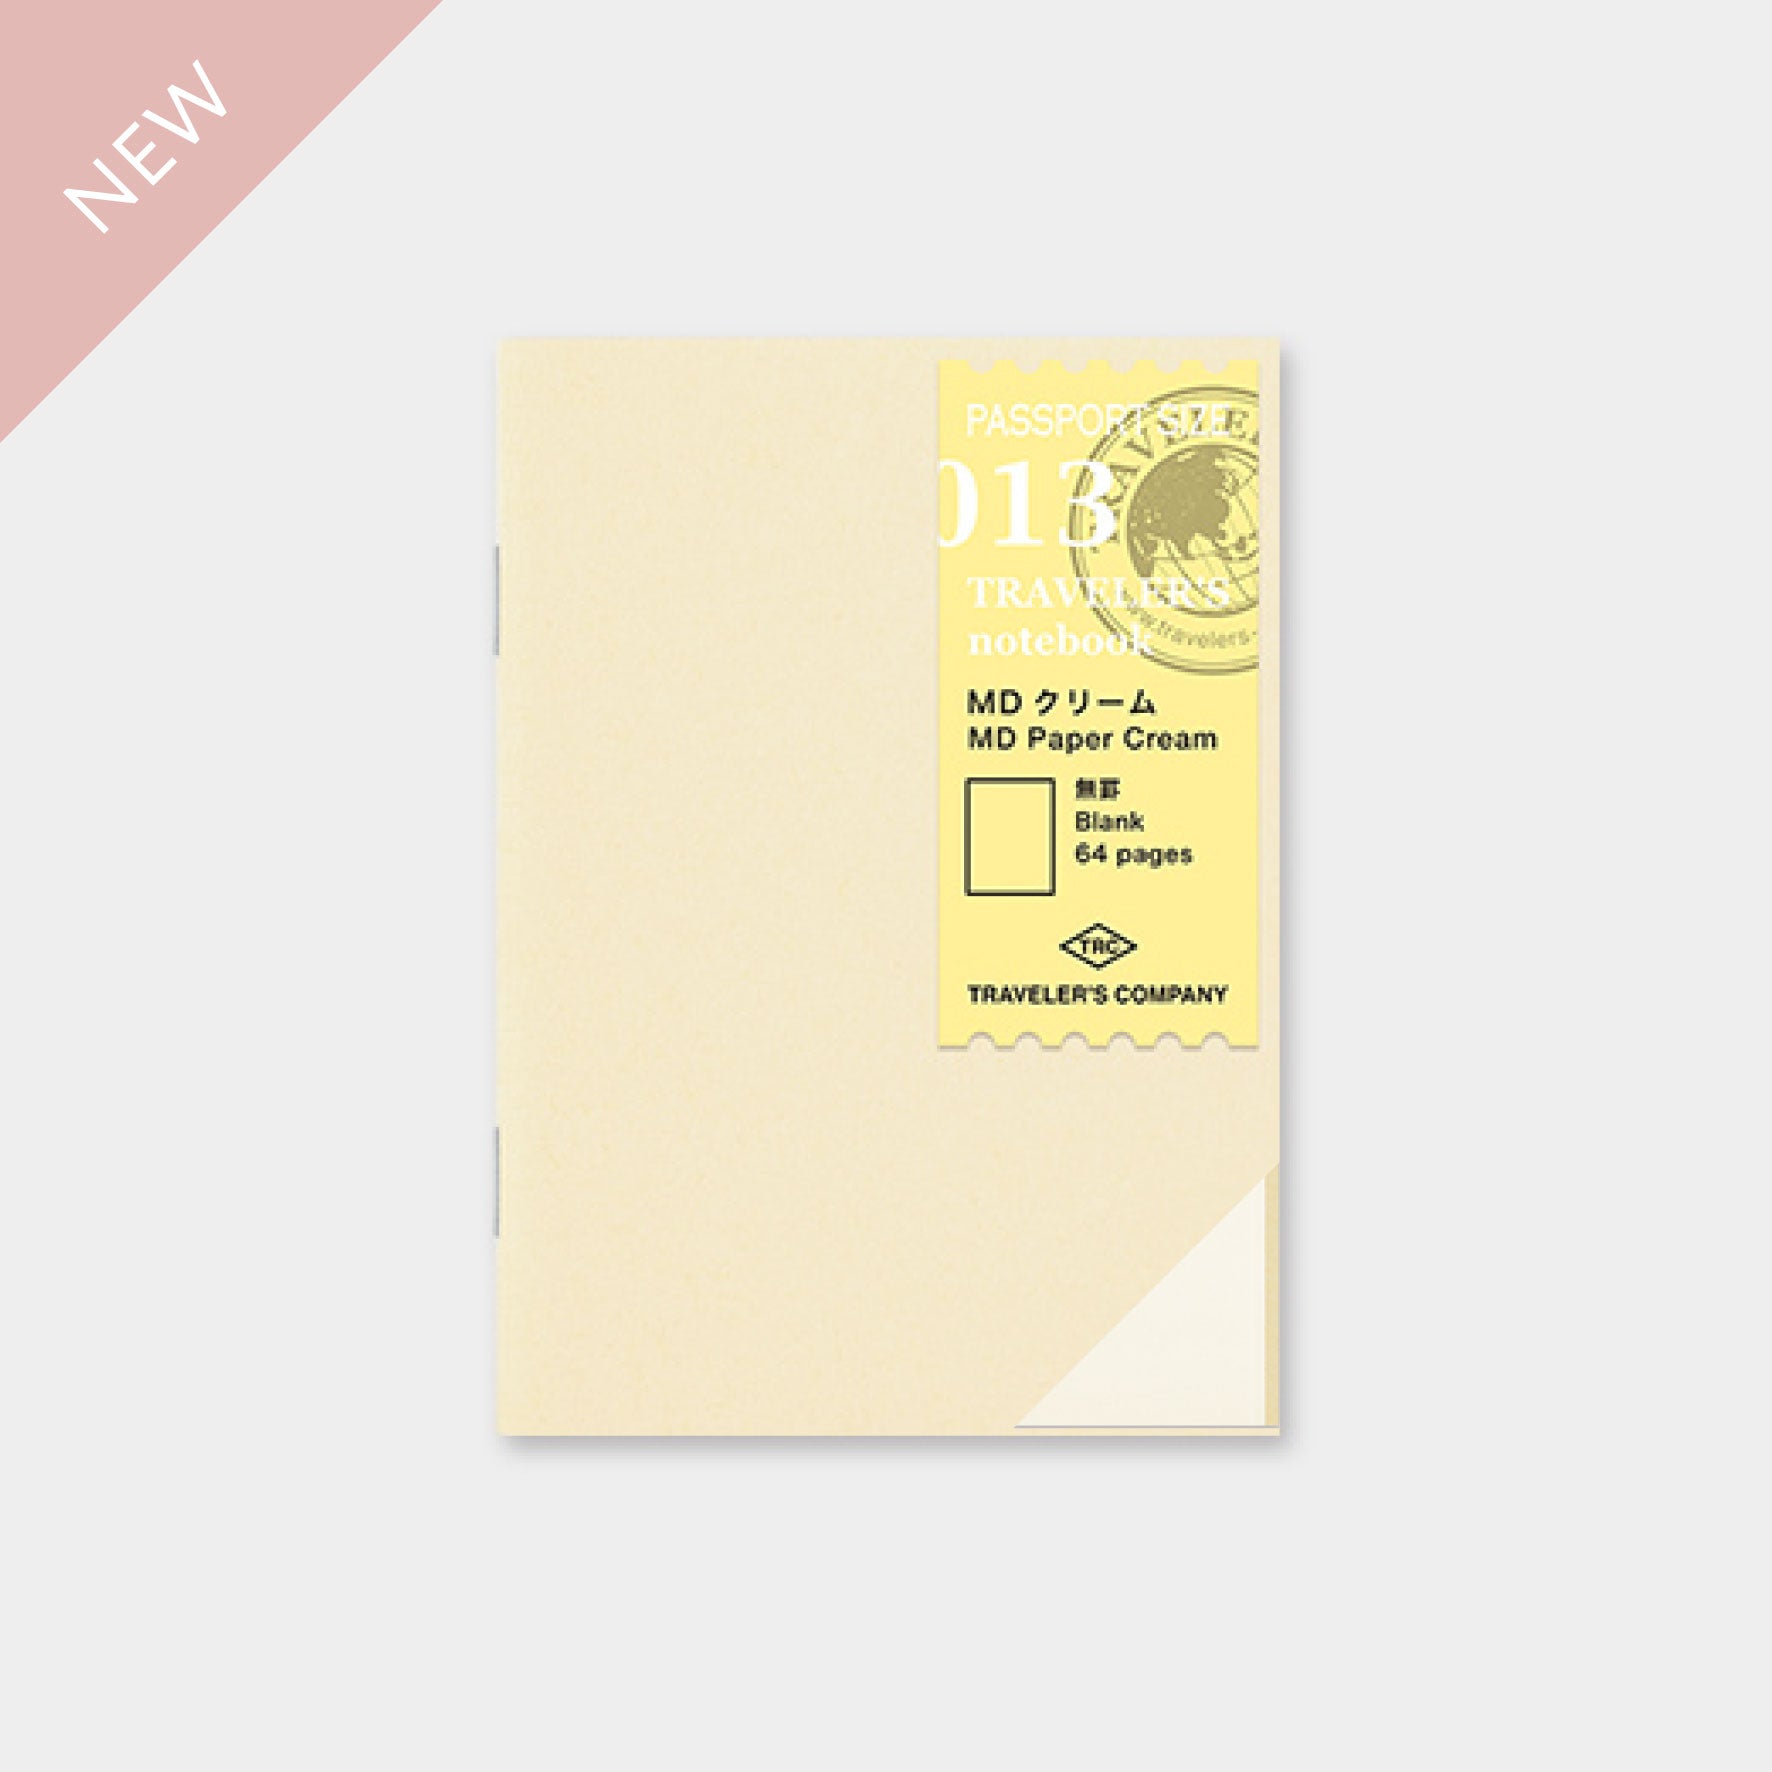 Traveler's Company - Inserts - Passport - 013 MD Paper Cream